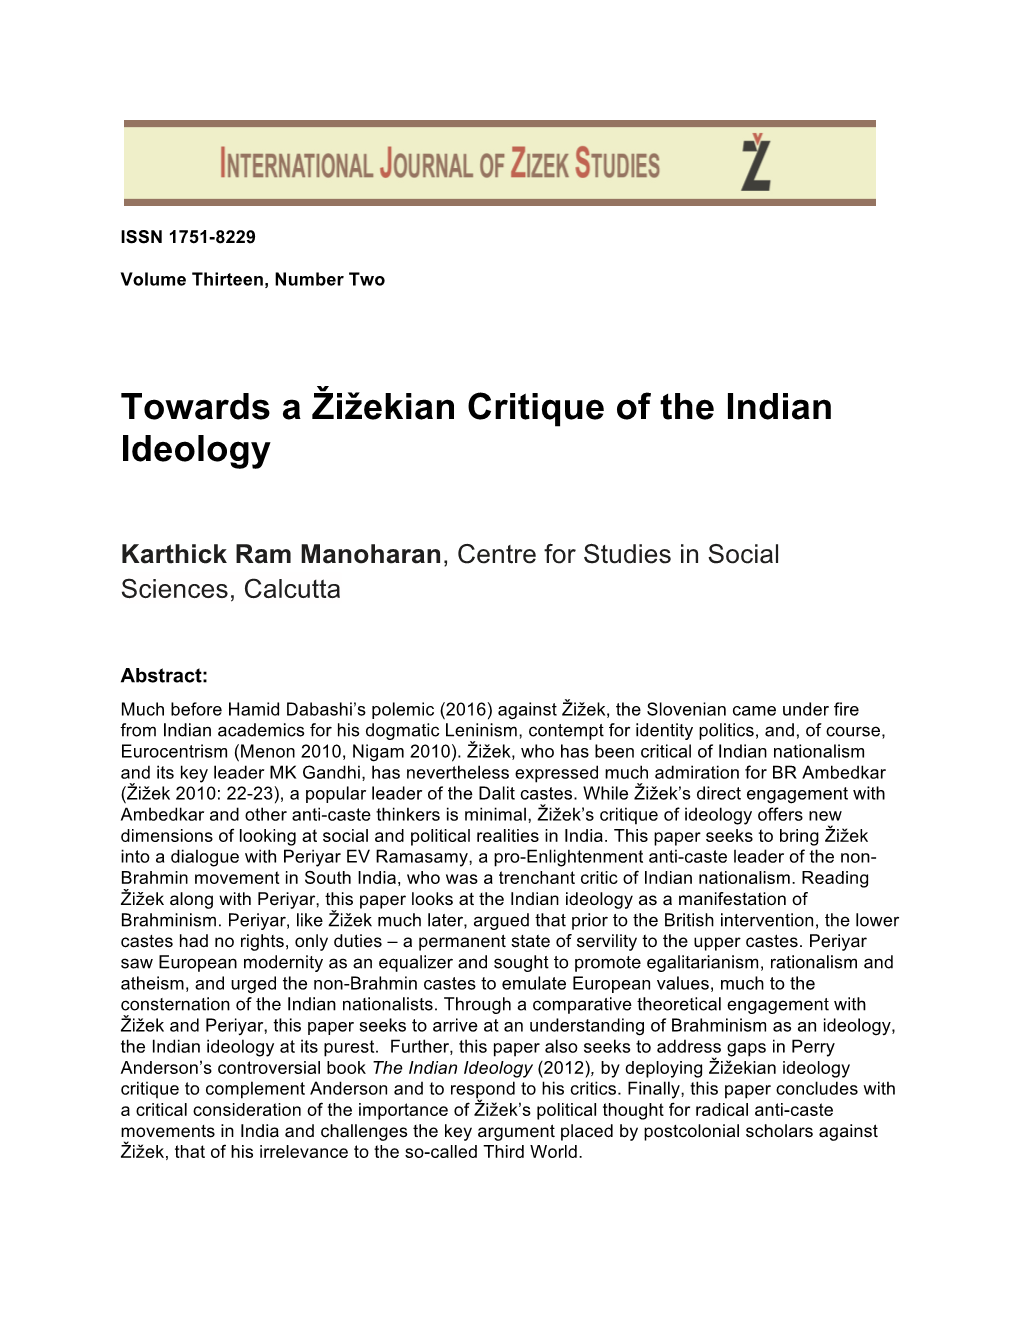 Towards a Žižekian Critique of the Indian Ideology